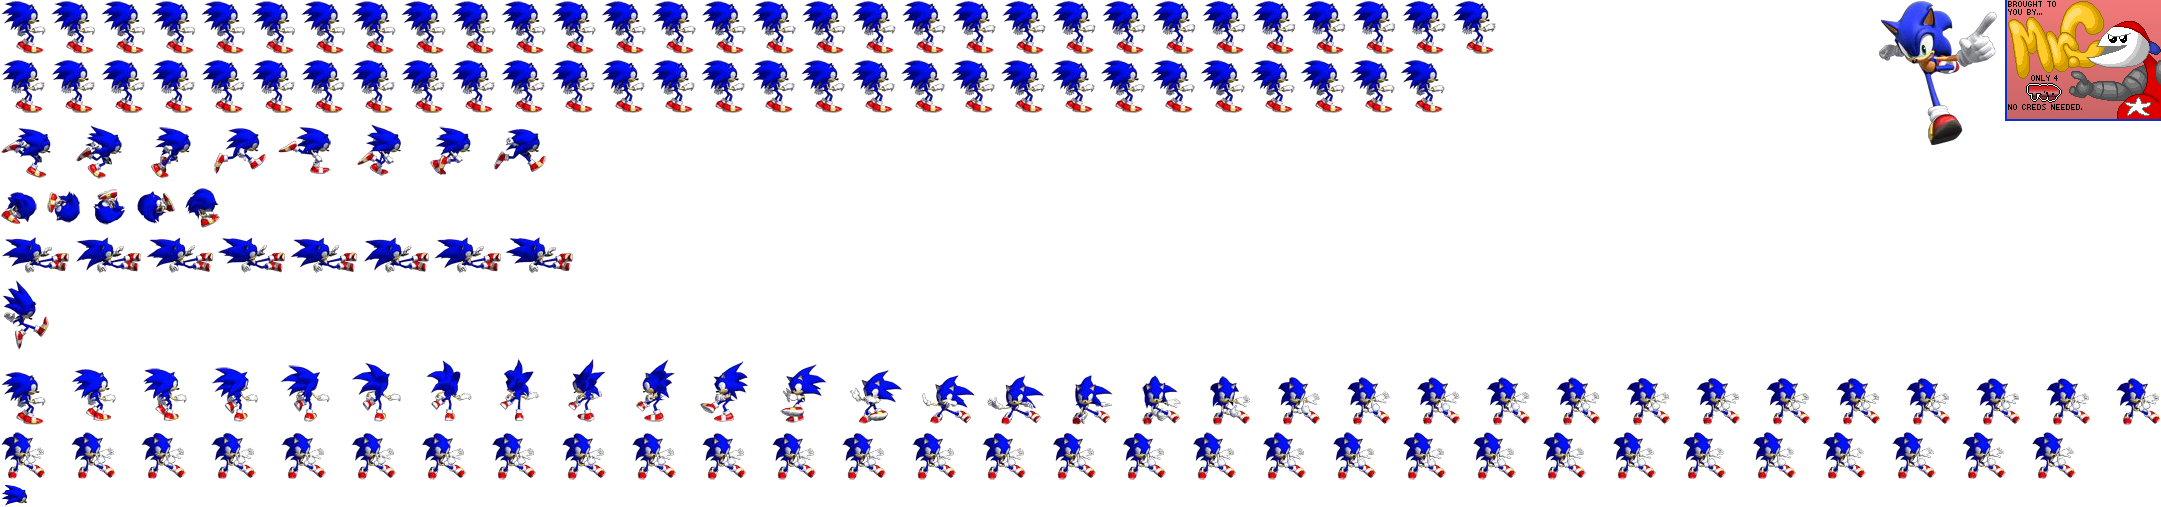 Sonic Rivals Dash - Sonic the Hedgehog